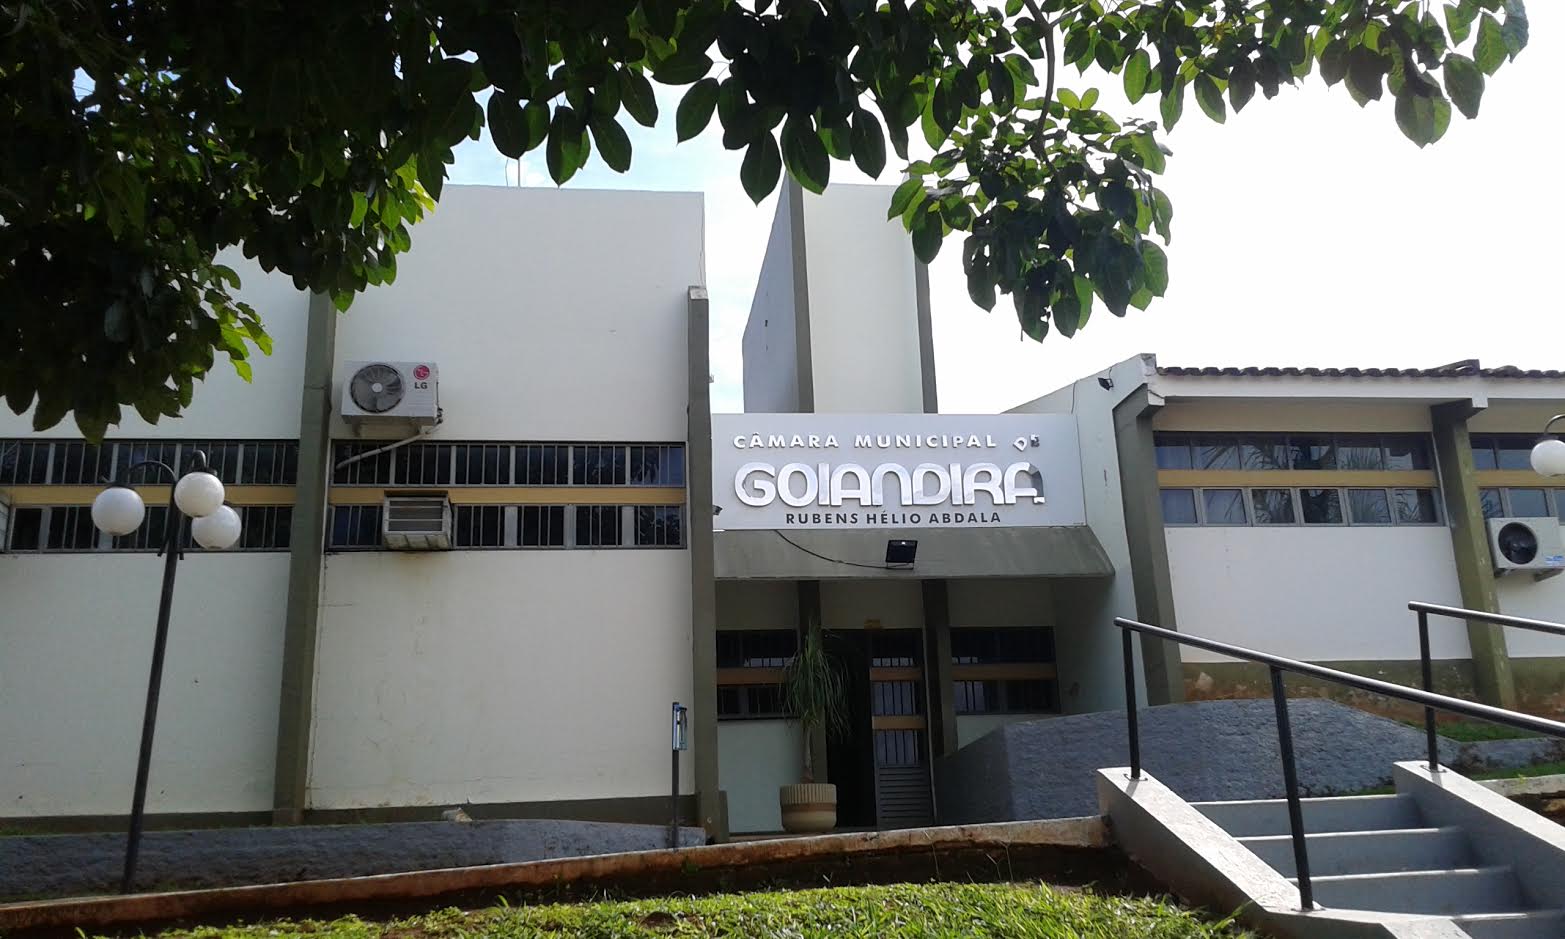 Foto da Câmara Municipal de Goiandira